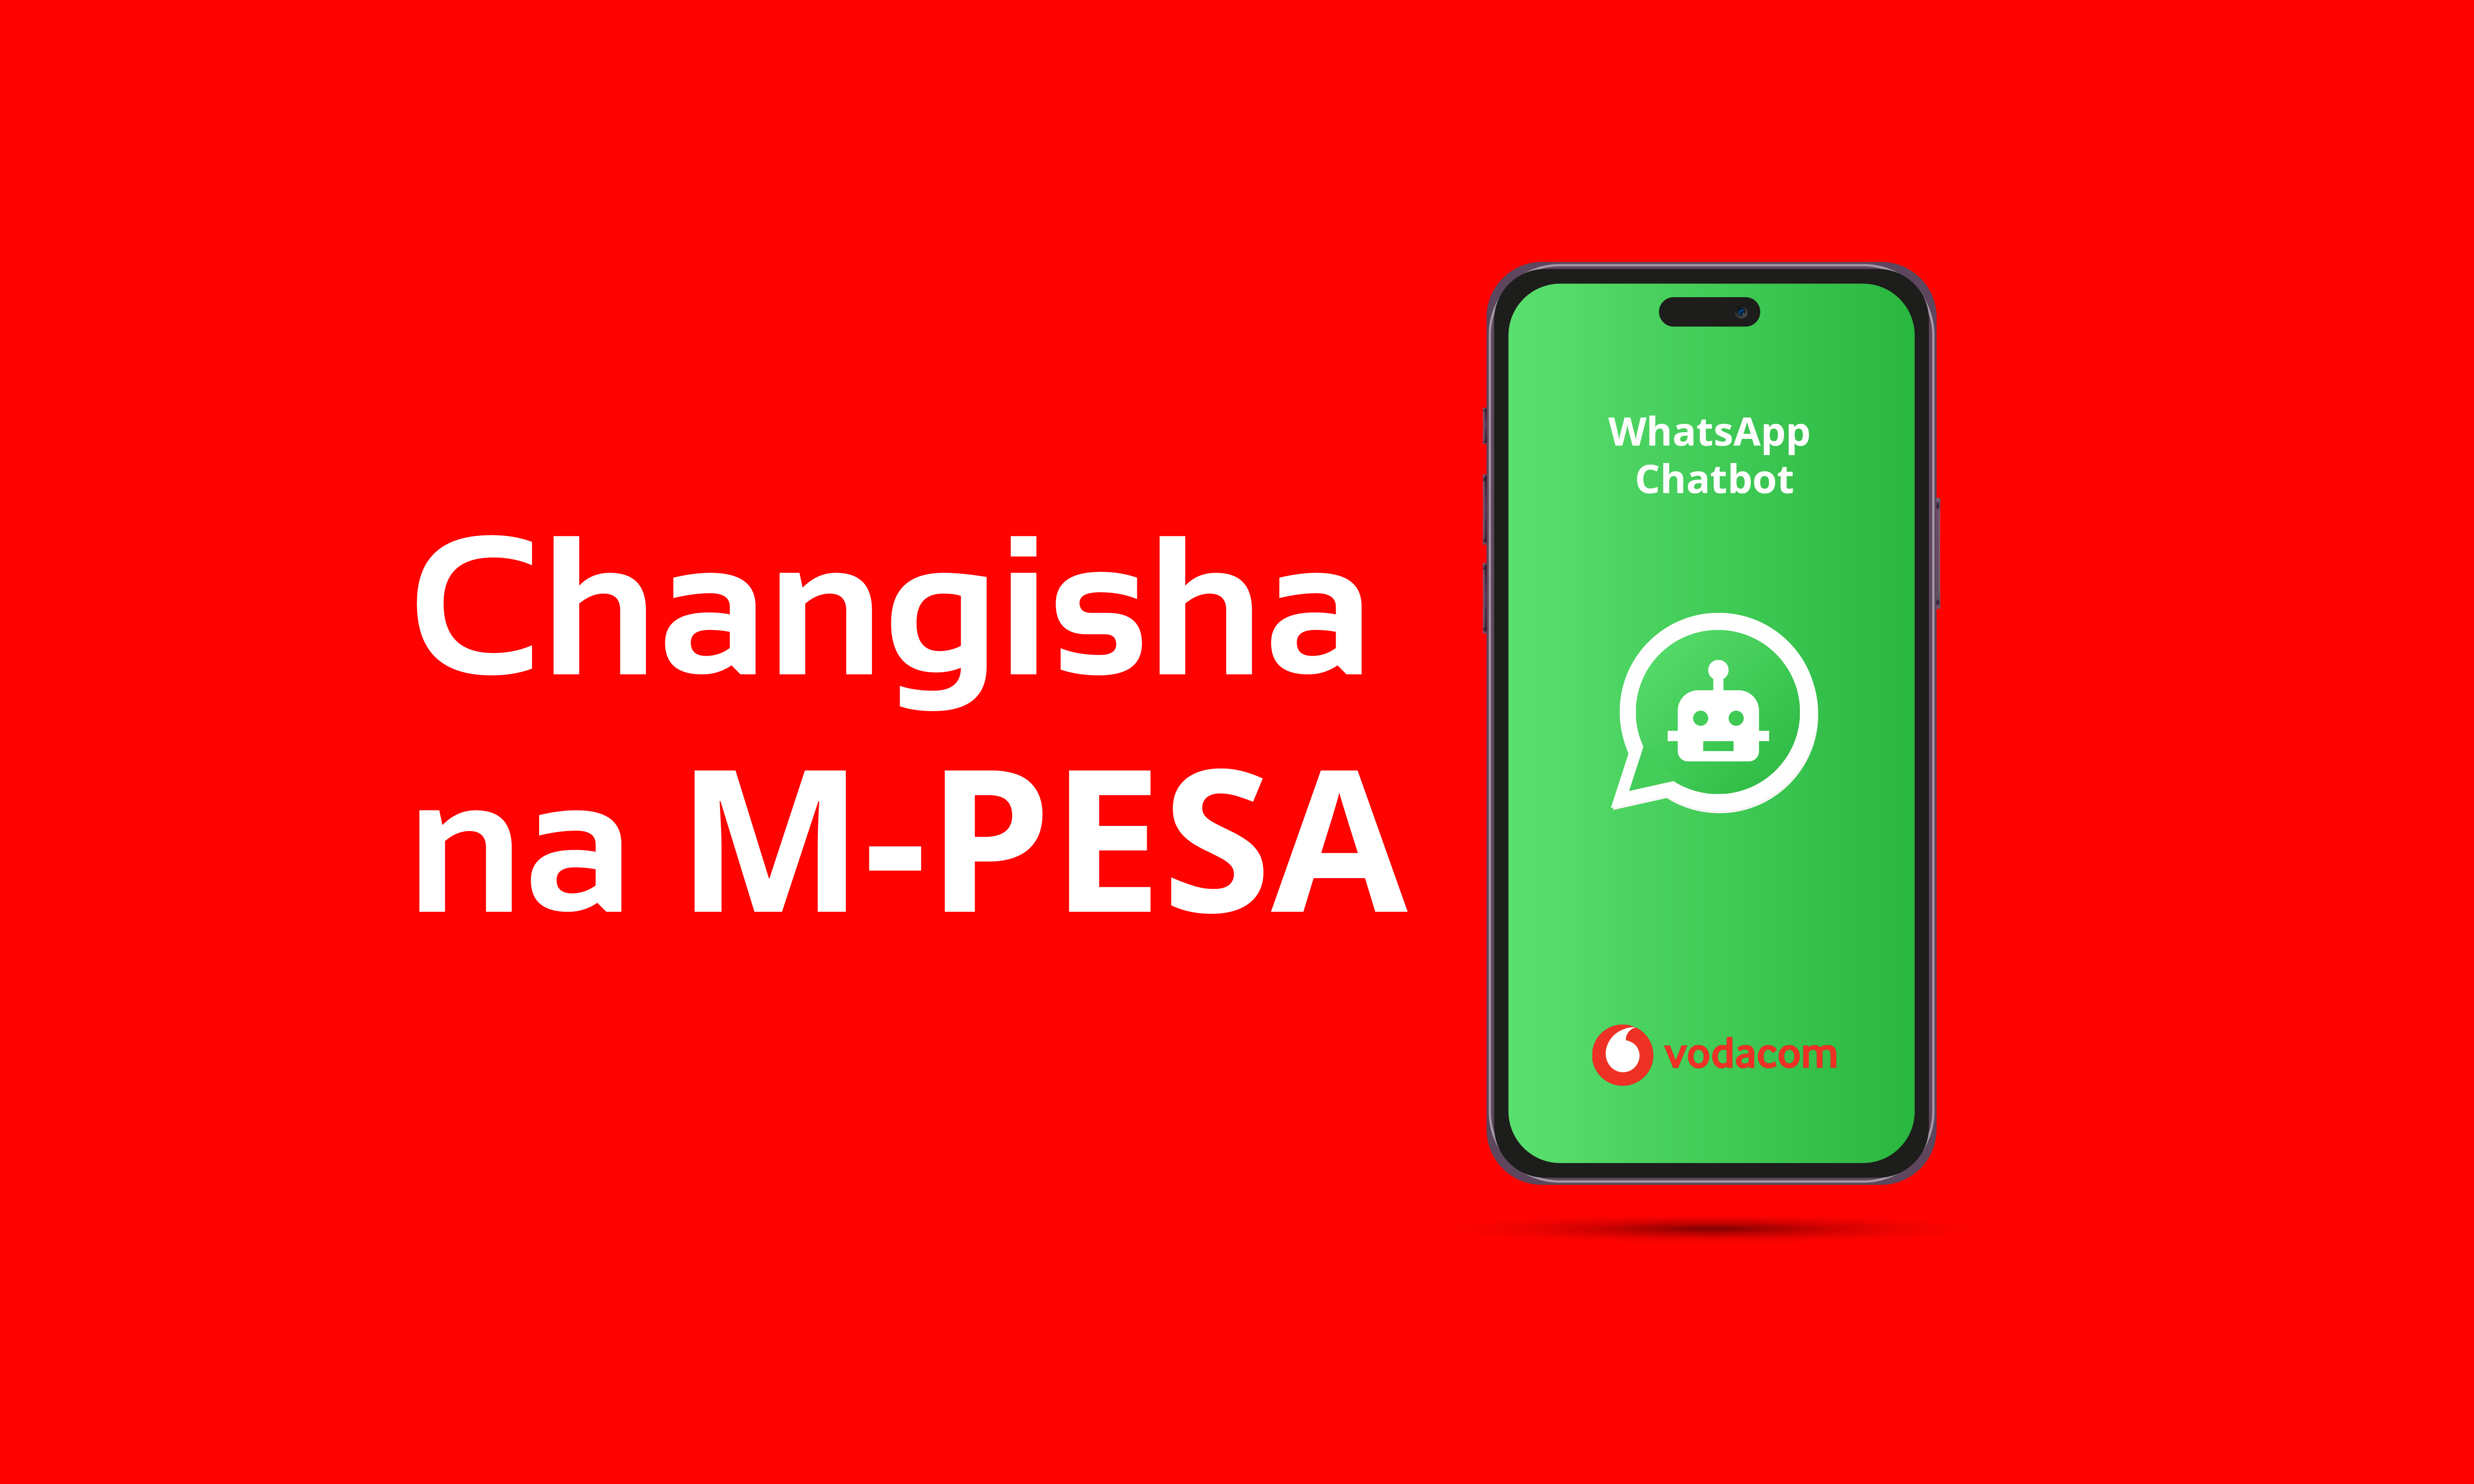 Changisha Whatsapp Chatbot